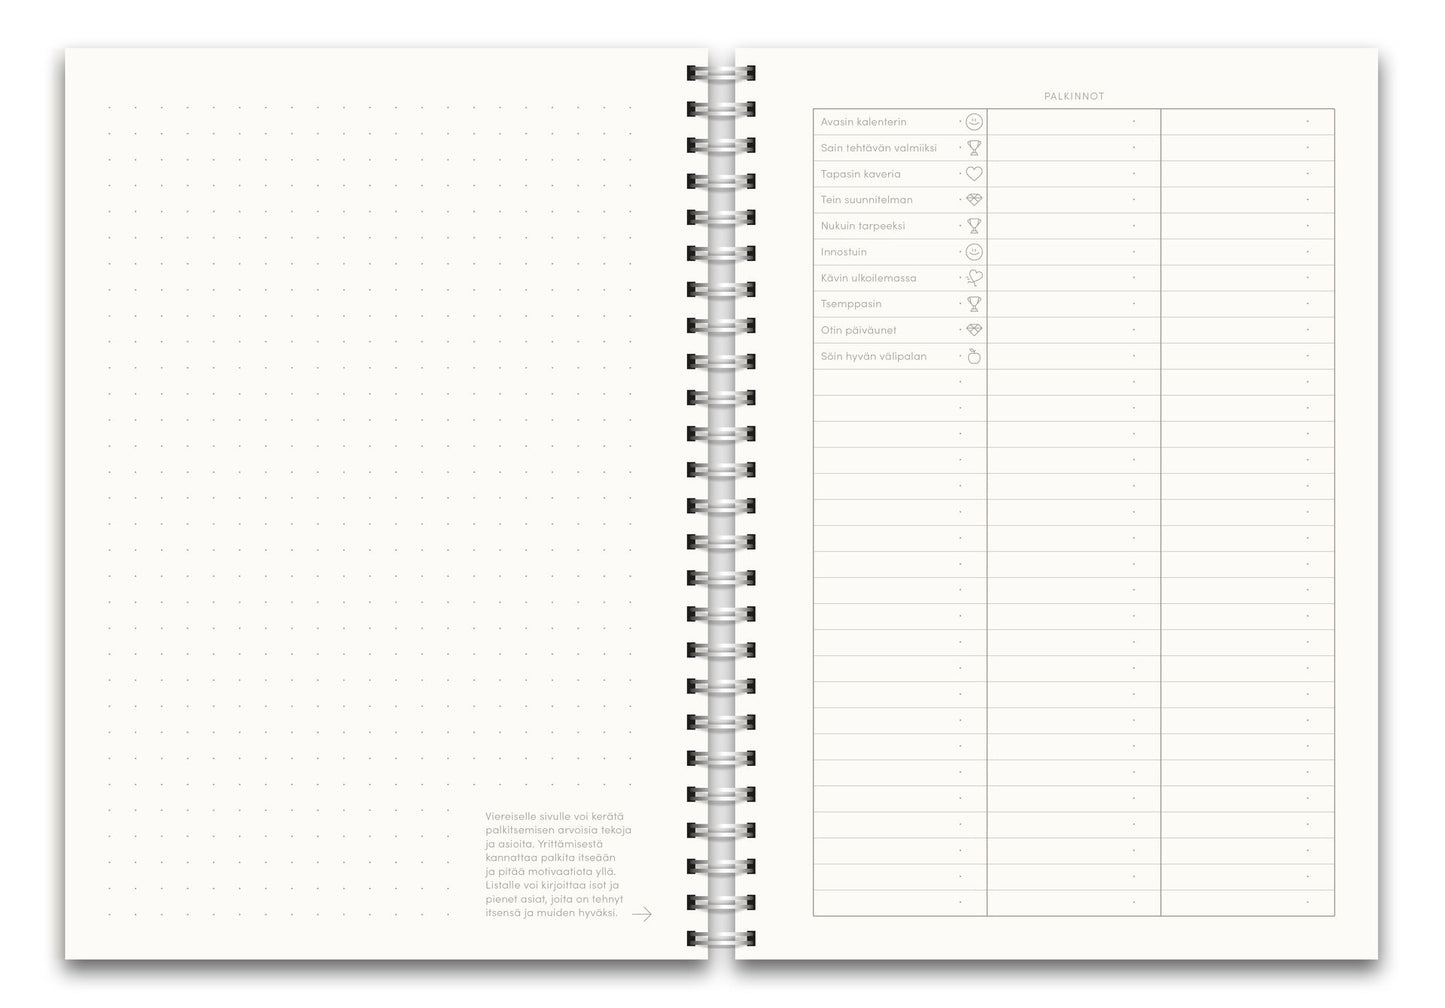 Set: Undated calendar, grid notebook and weekly planner - Tutori